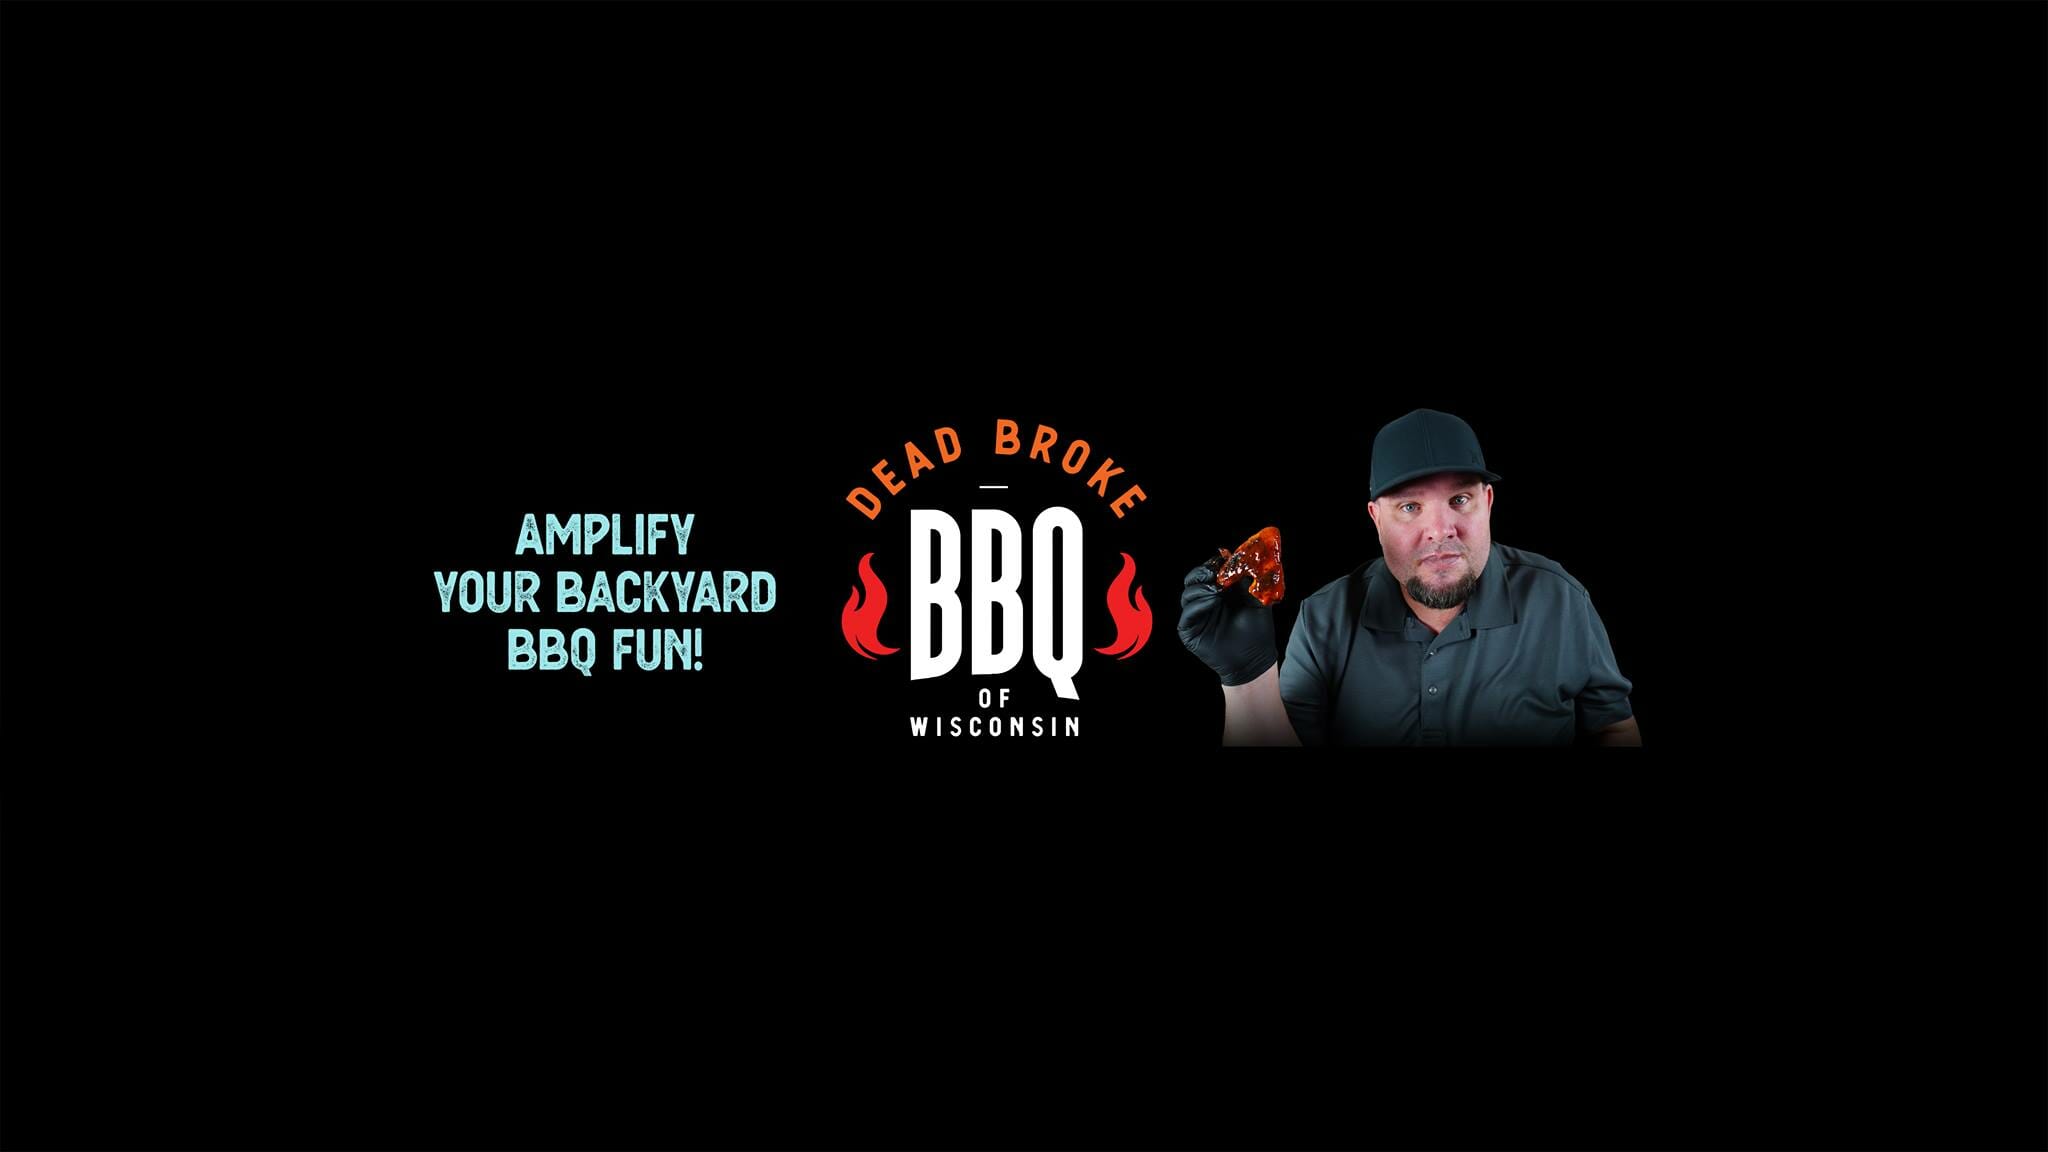 Dead Broke BBQ of Wisconsin: Amplify Your Backyard Fun!